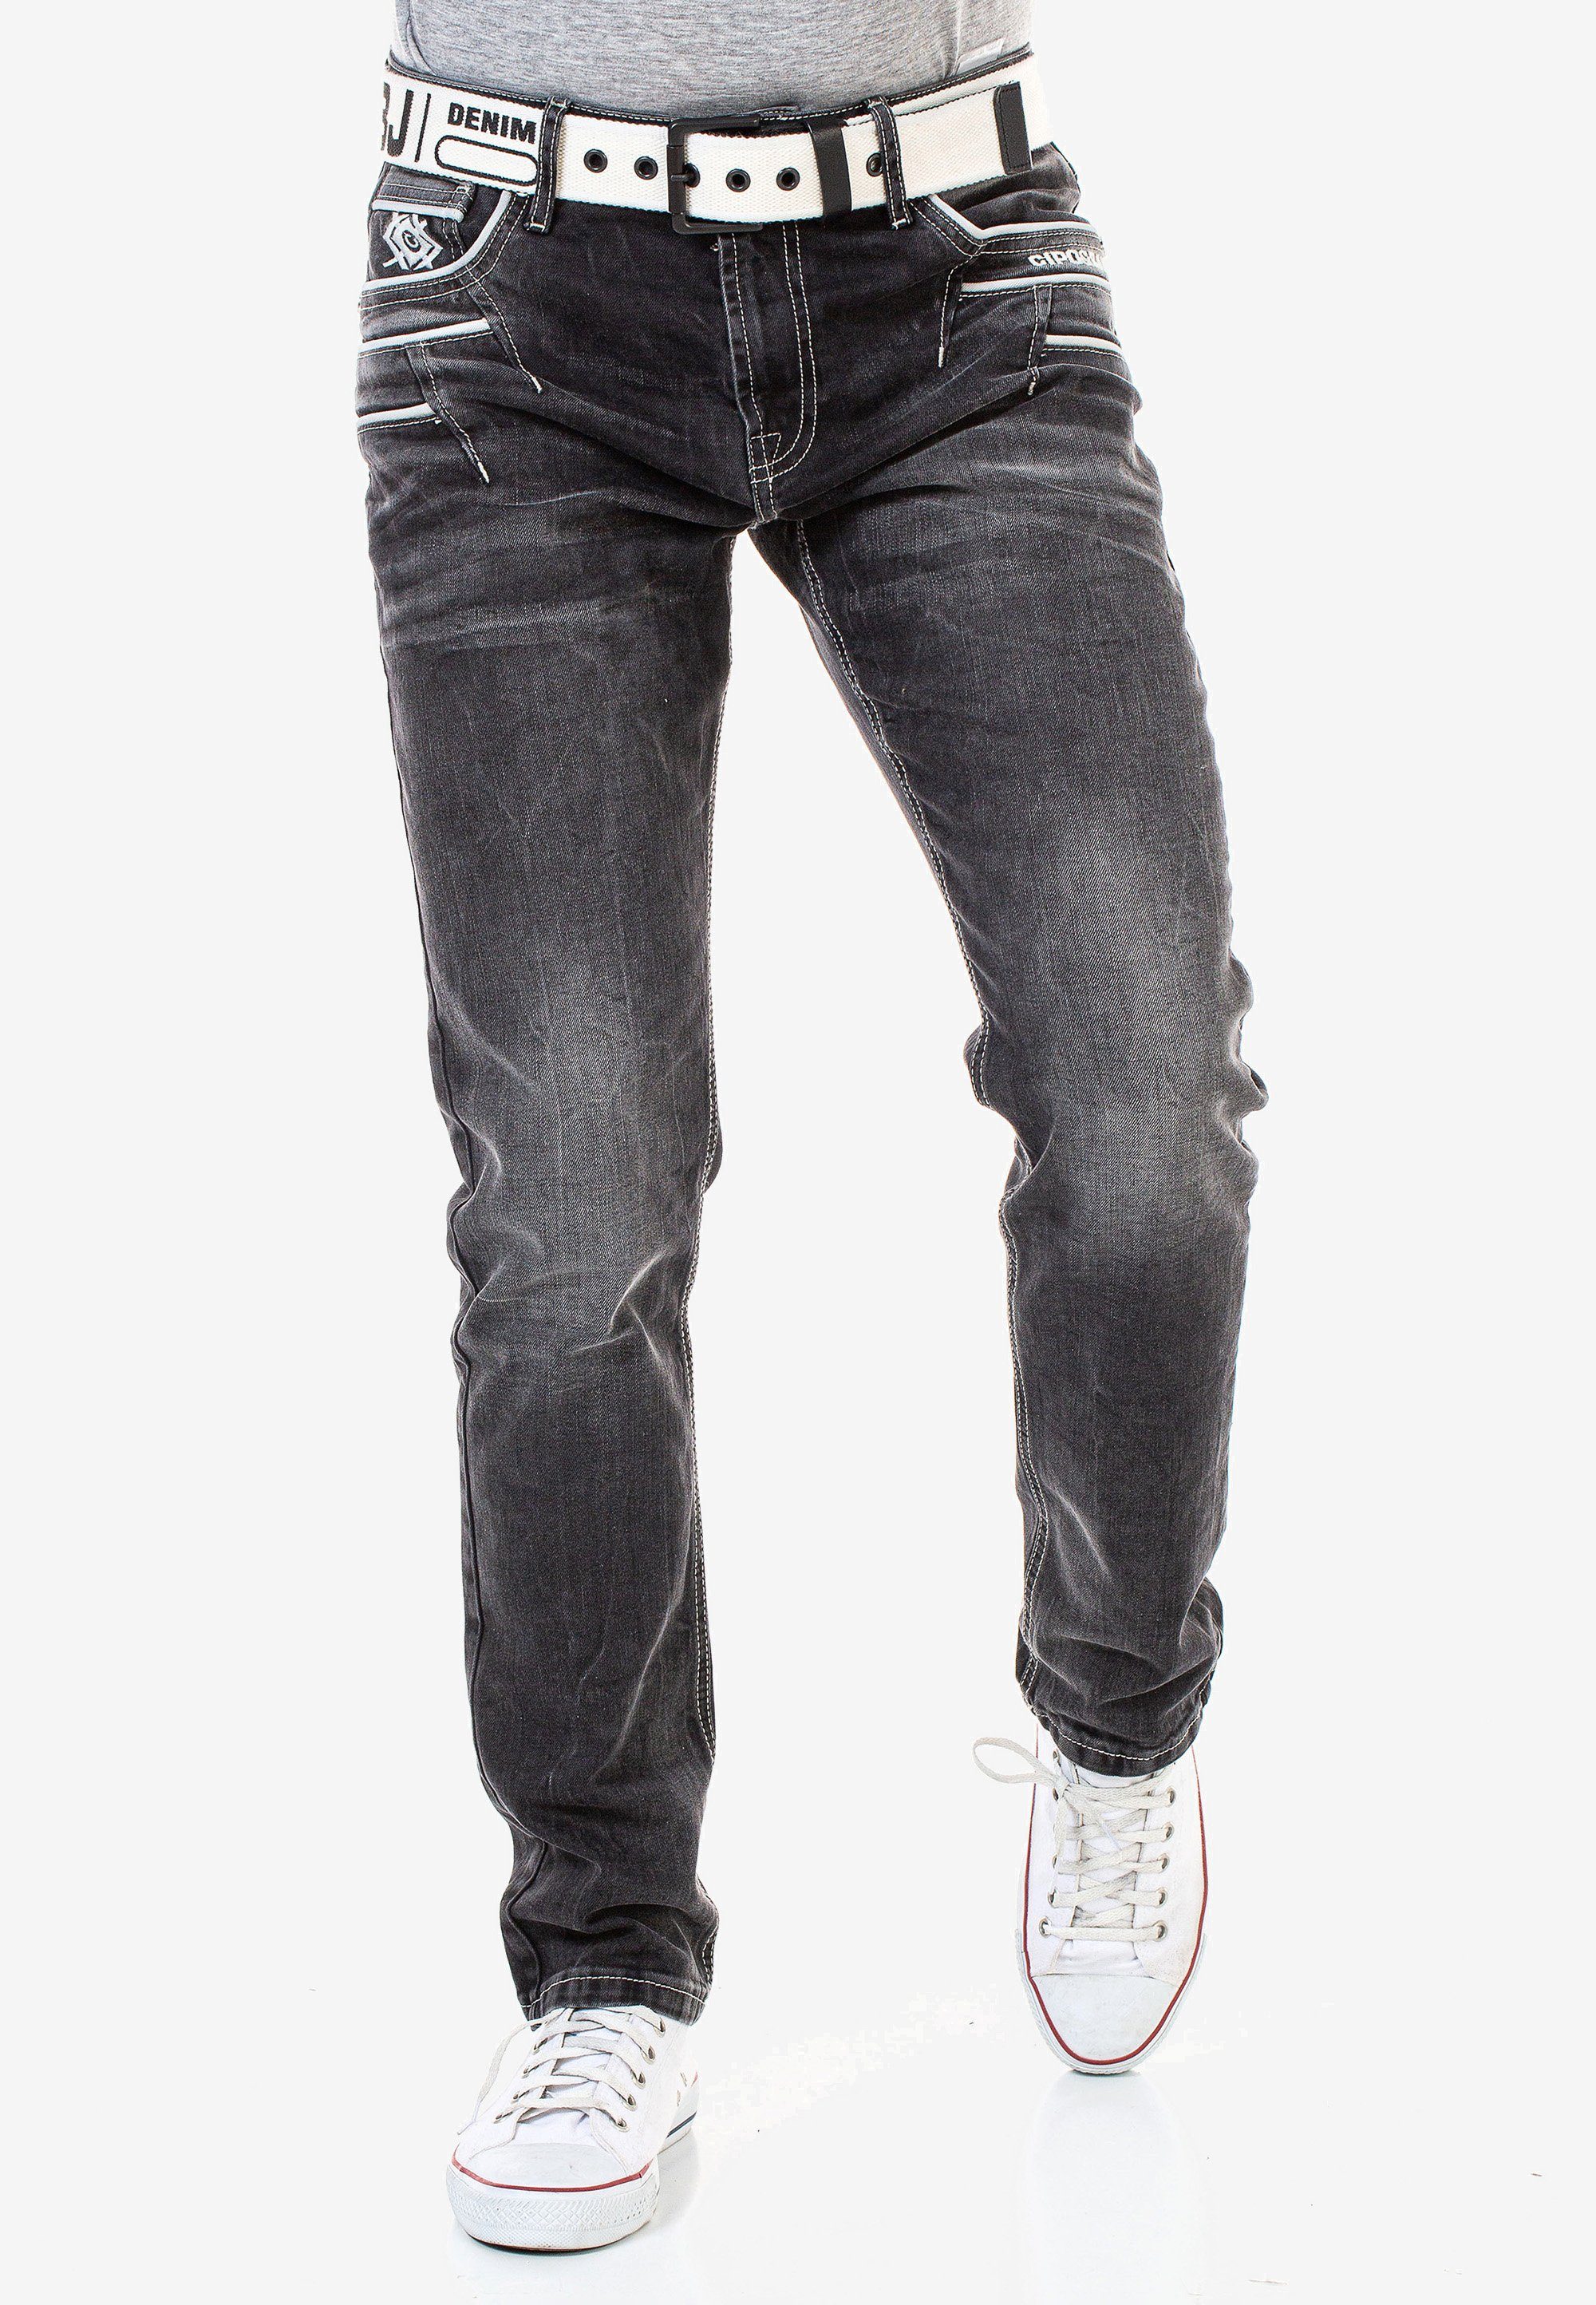 Cipo & Baxx Bequeme Jeans mit Kontrastnähten